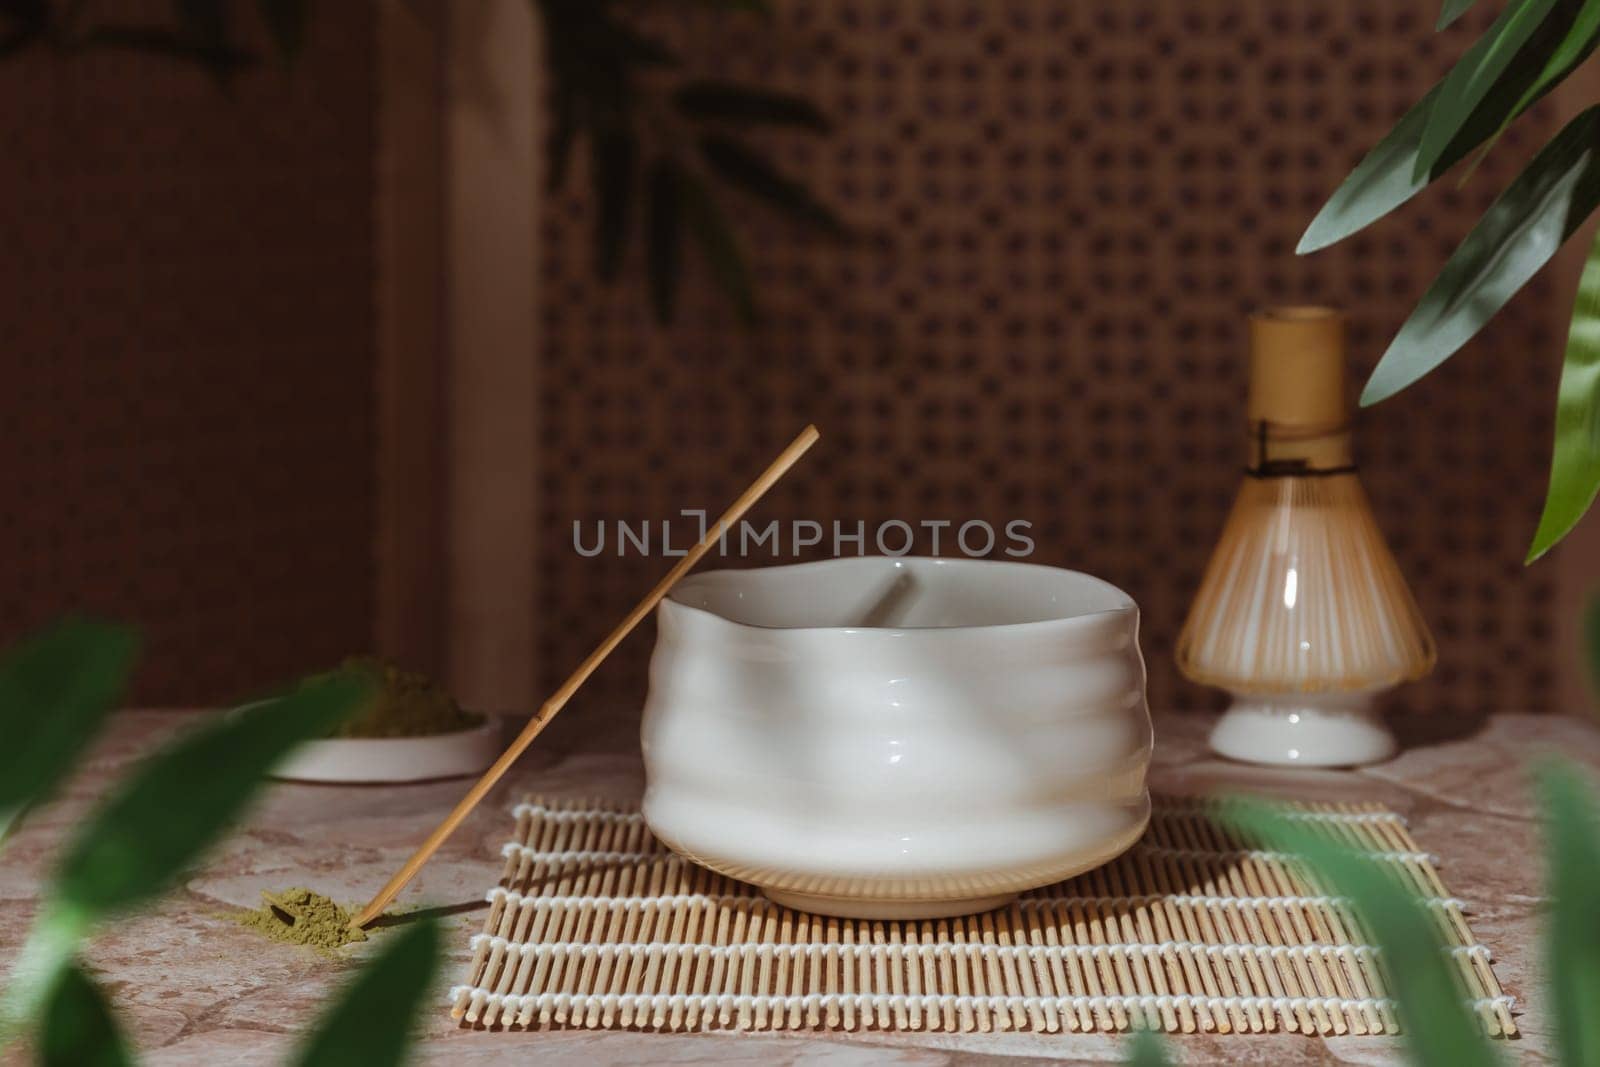 Japanese tea ceremony with a matcha. Tyawan, tyasaku, tyasen on a stone table top among bamboo leaves